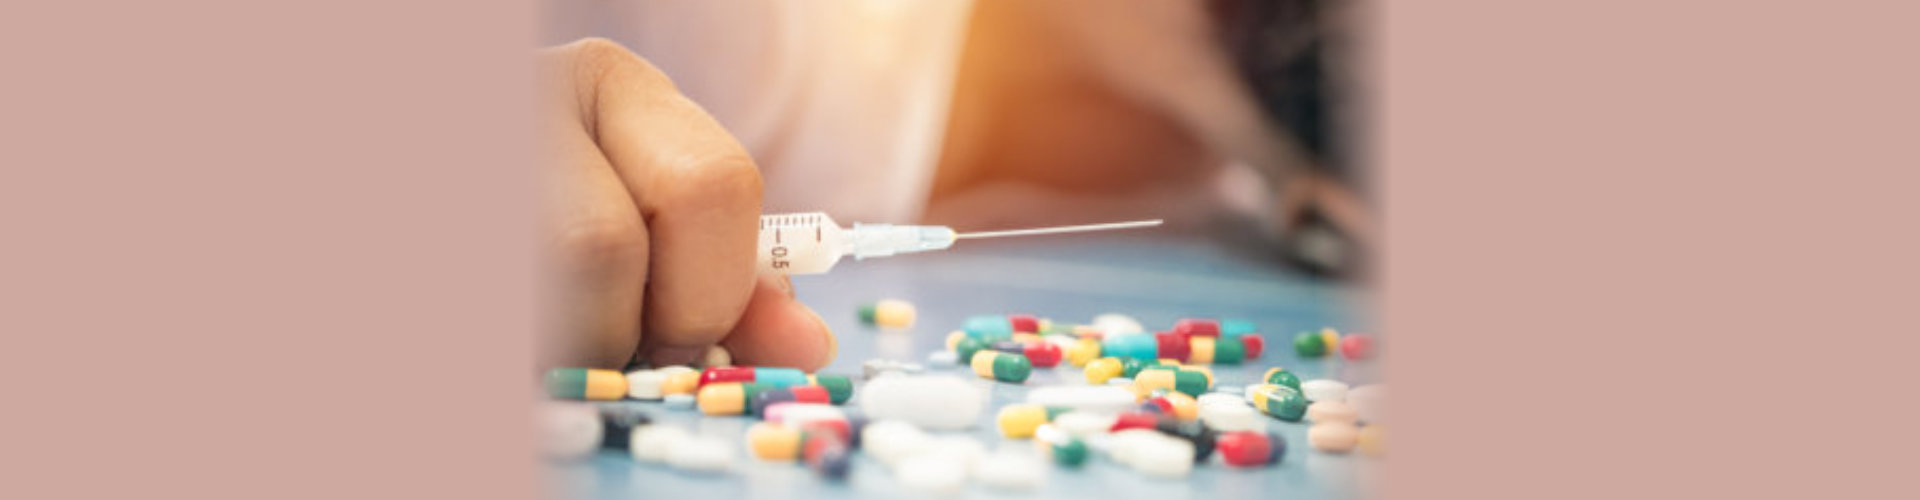 Overdose - close up of pills and addict